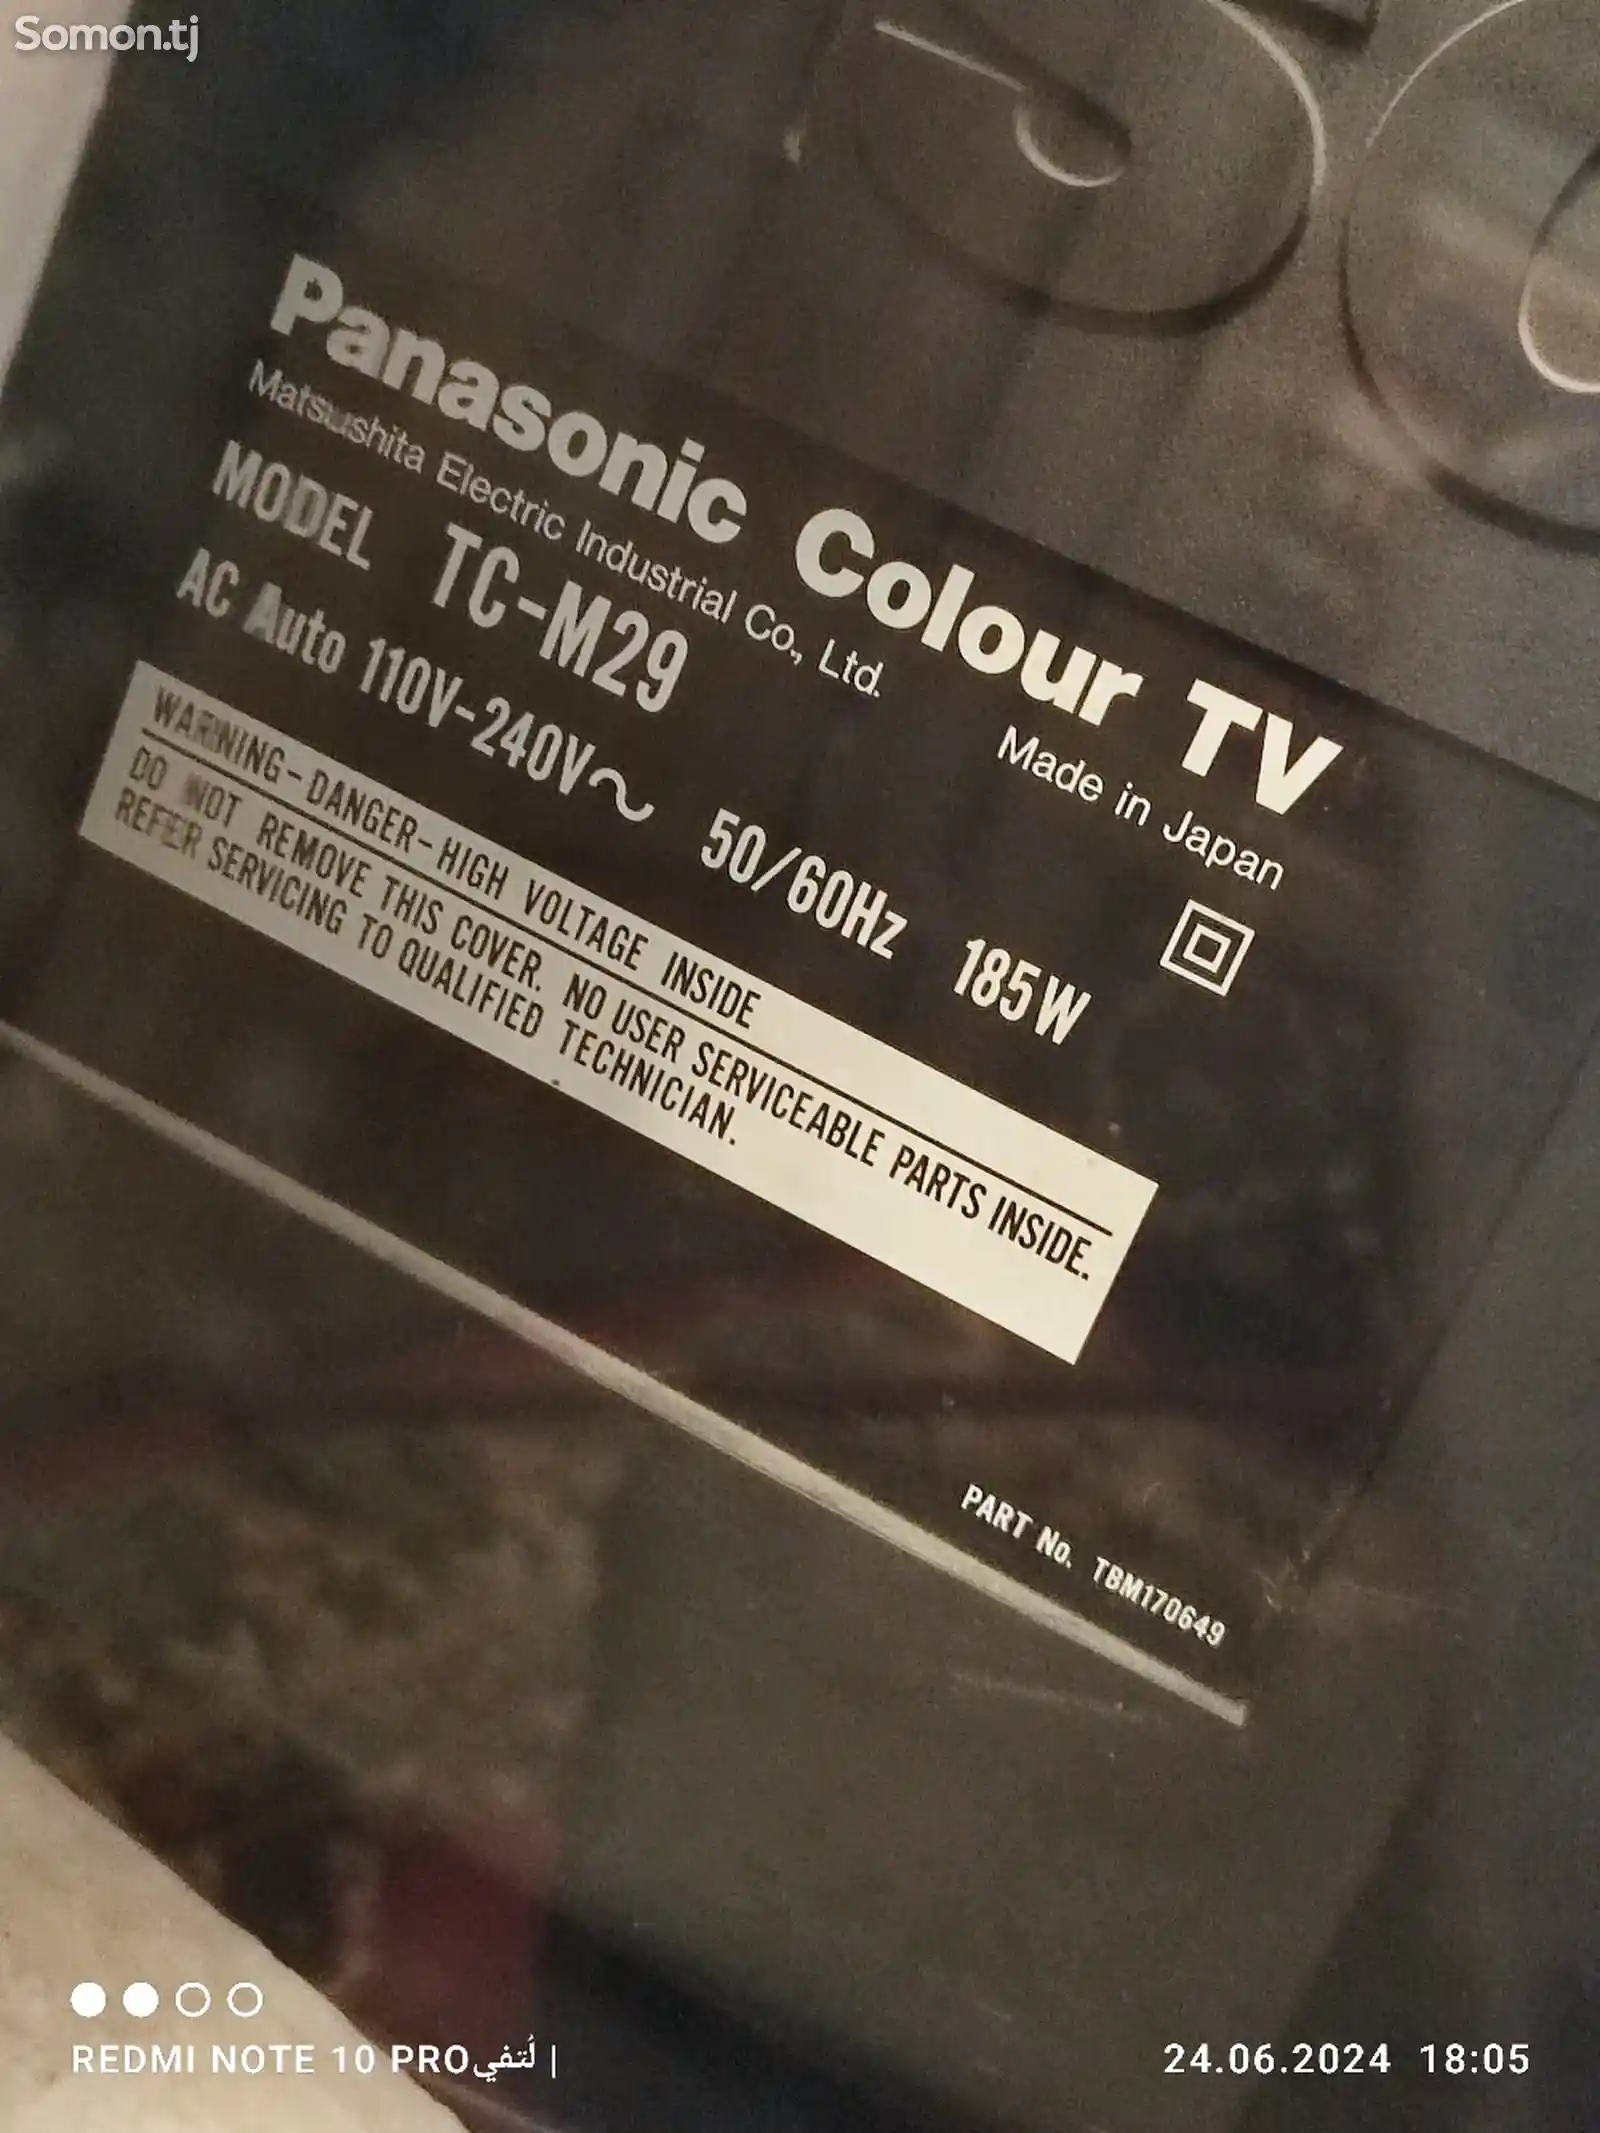 Японский телевизор Panasonic Colour TV, Tс-M29-2